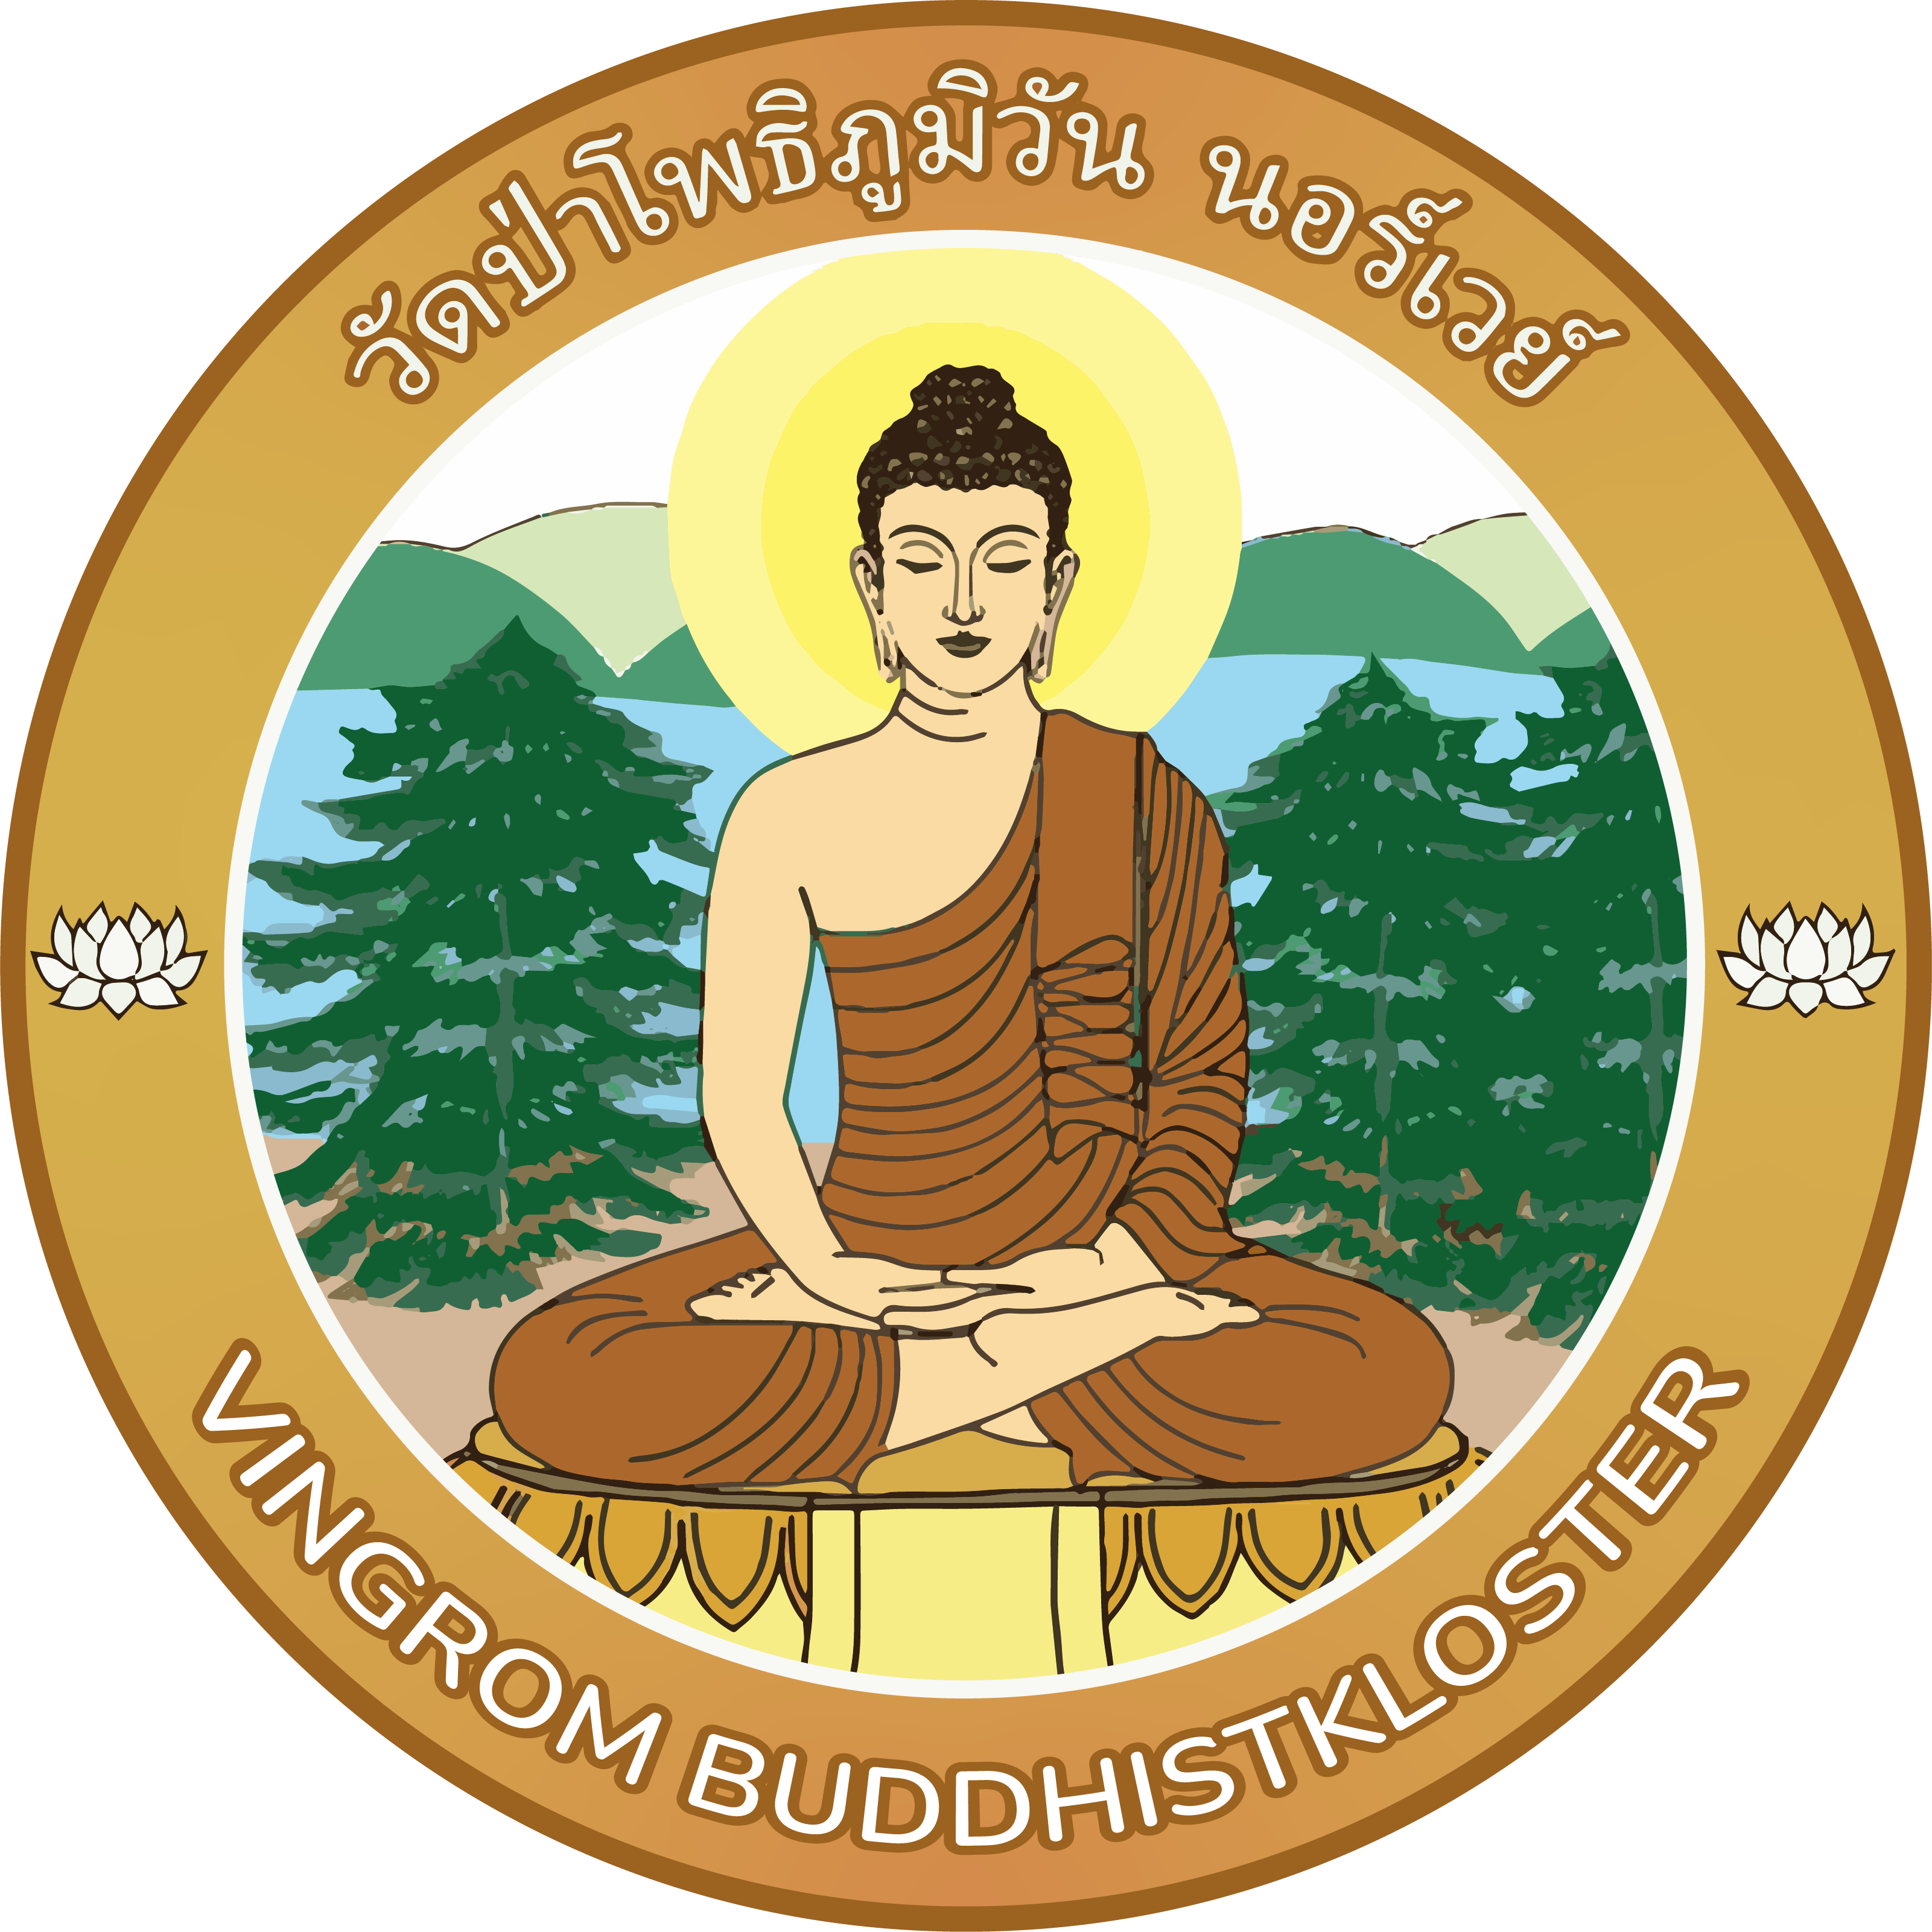 Vingrom Buddhistkloster